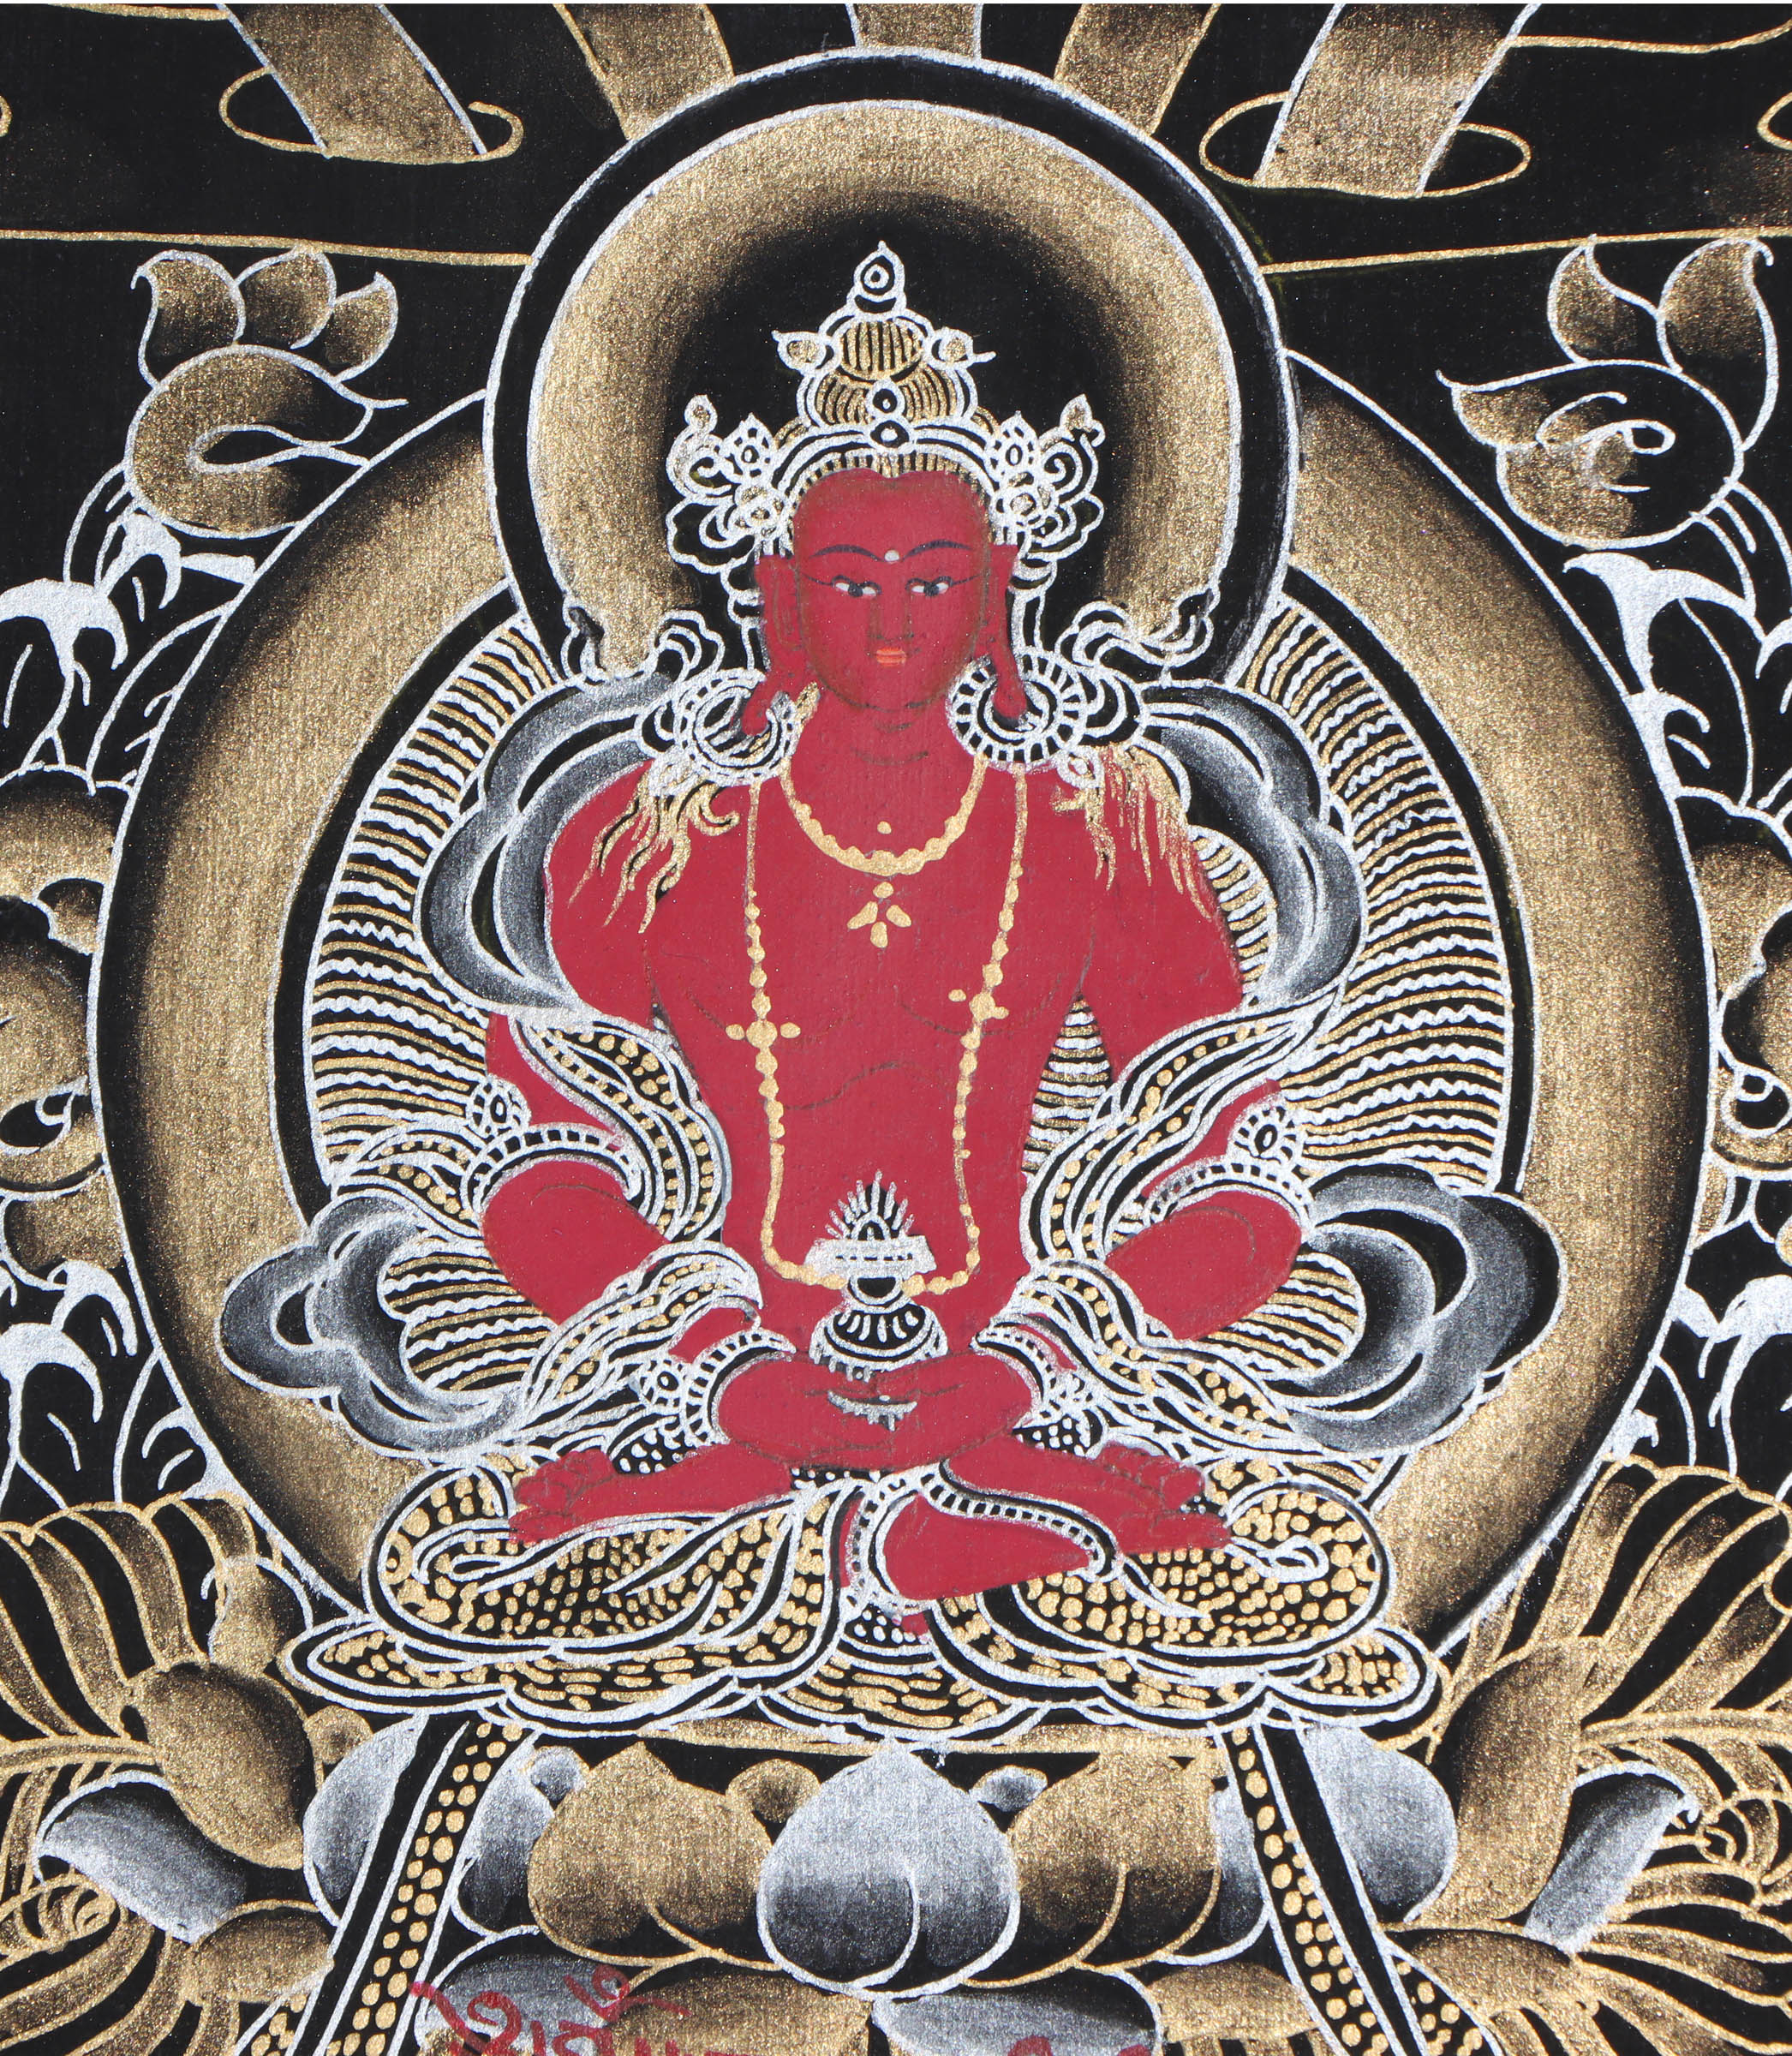 Shakyamuni  Buddha Thangka Painting - Painted only using natural stone color - Himalayas ShopBuddha Thangka Painting - Painted only using natural stone color - Himalayas Shop